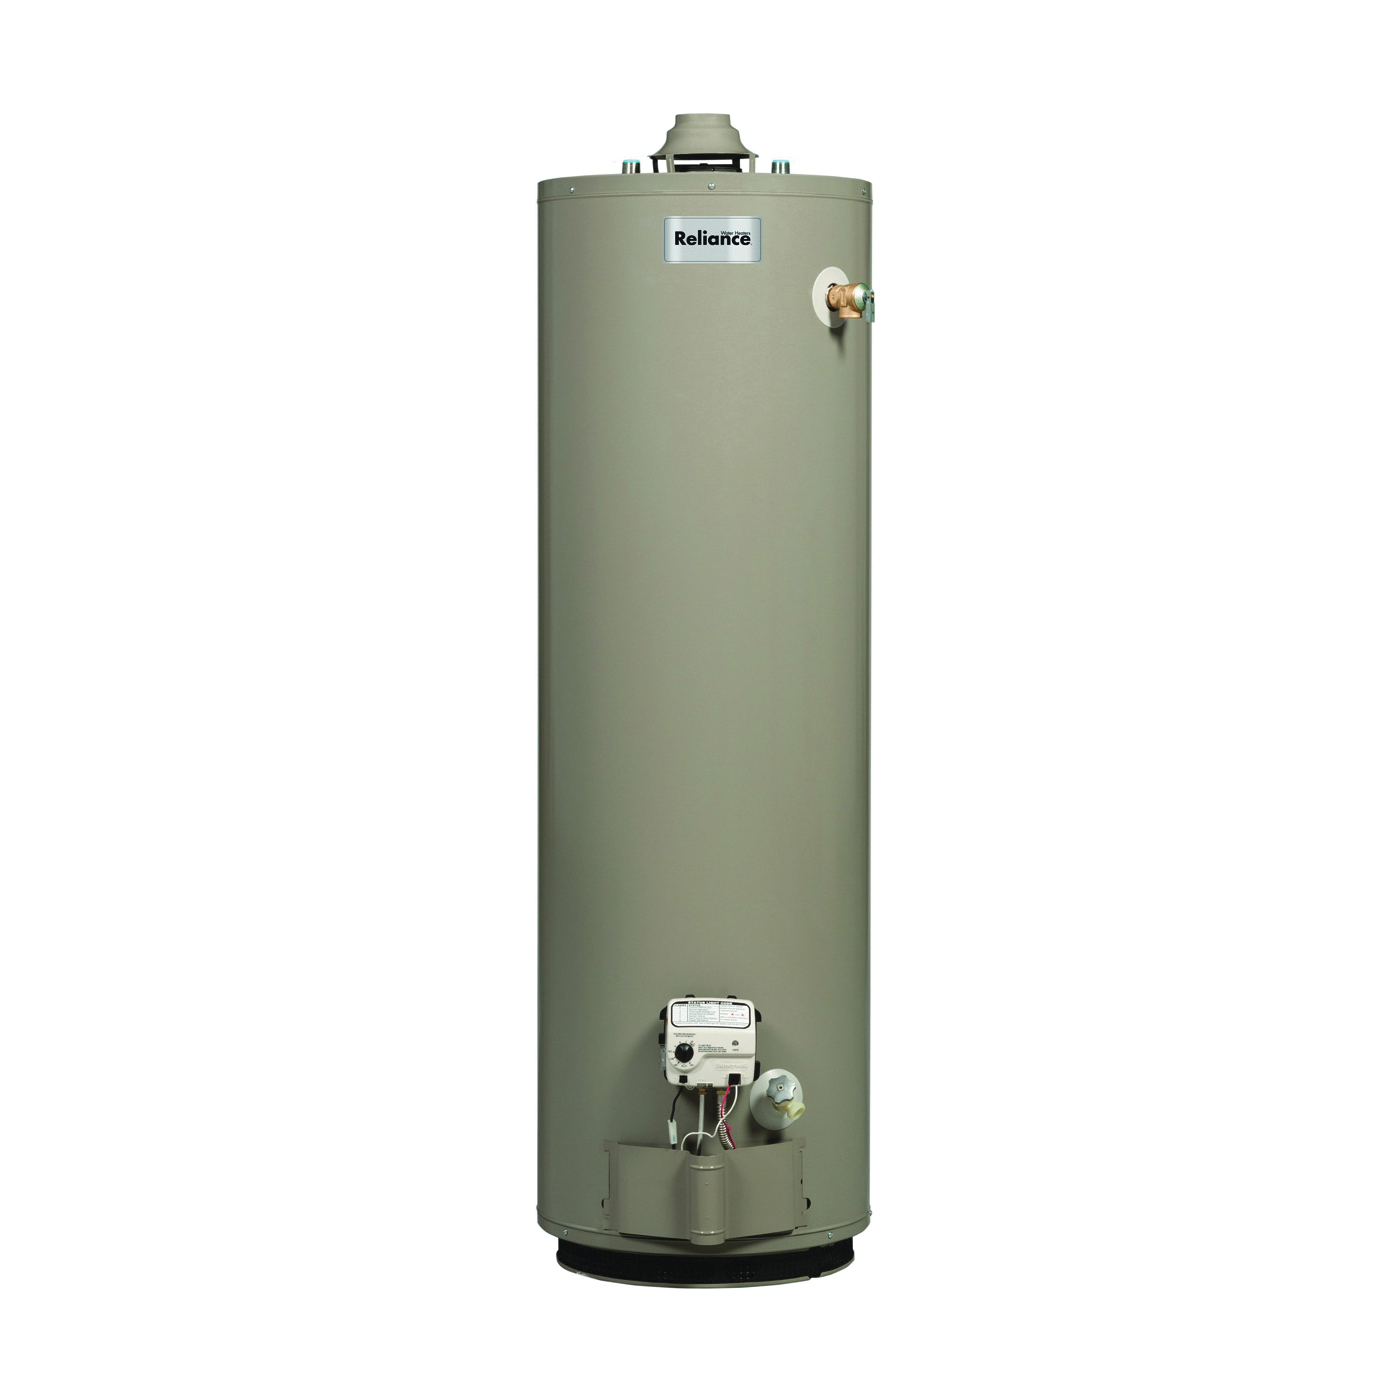 Reliance 6 30 POCT Gas Water Heater, Propane, 30 gal Tank, 69 gph, 35500 Btu BTU, 0.6 Energy Efficiency